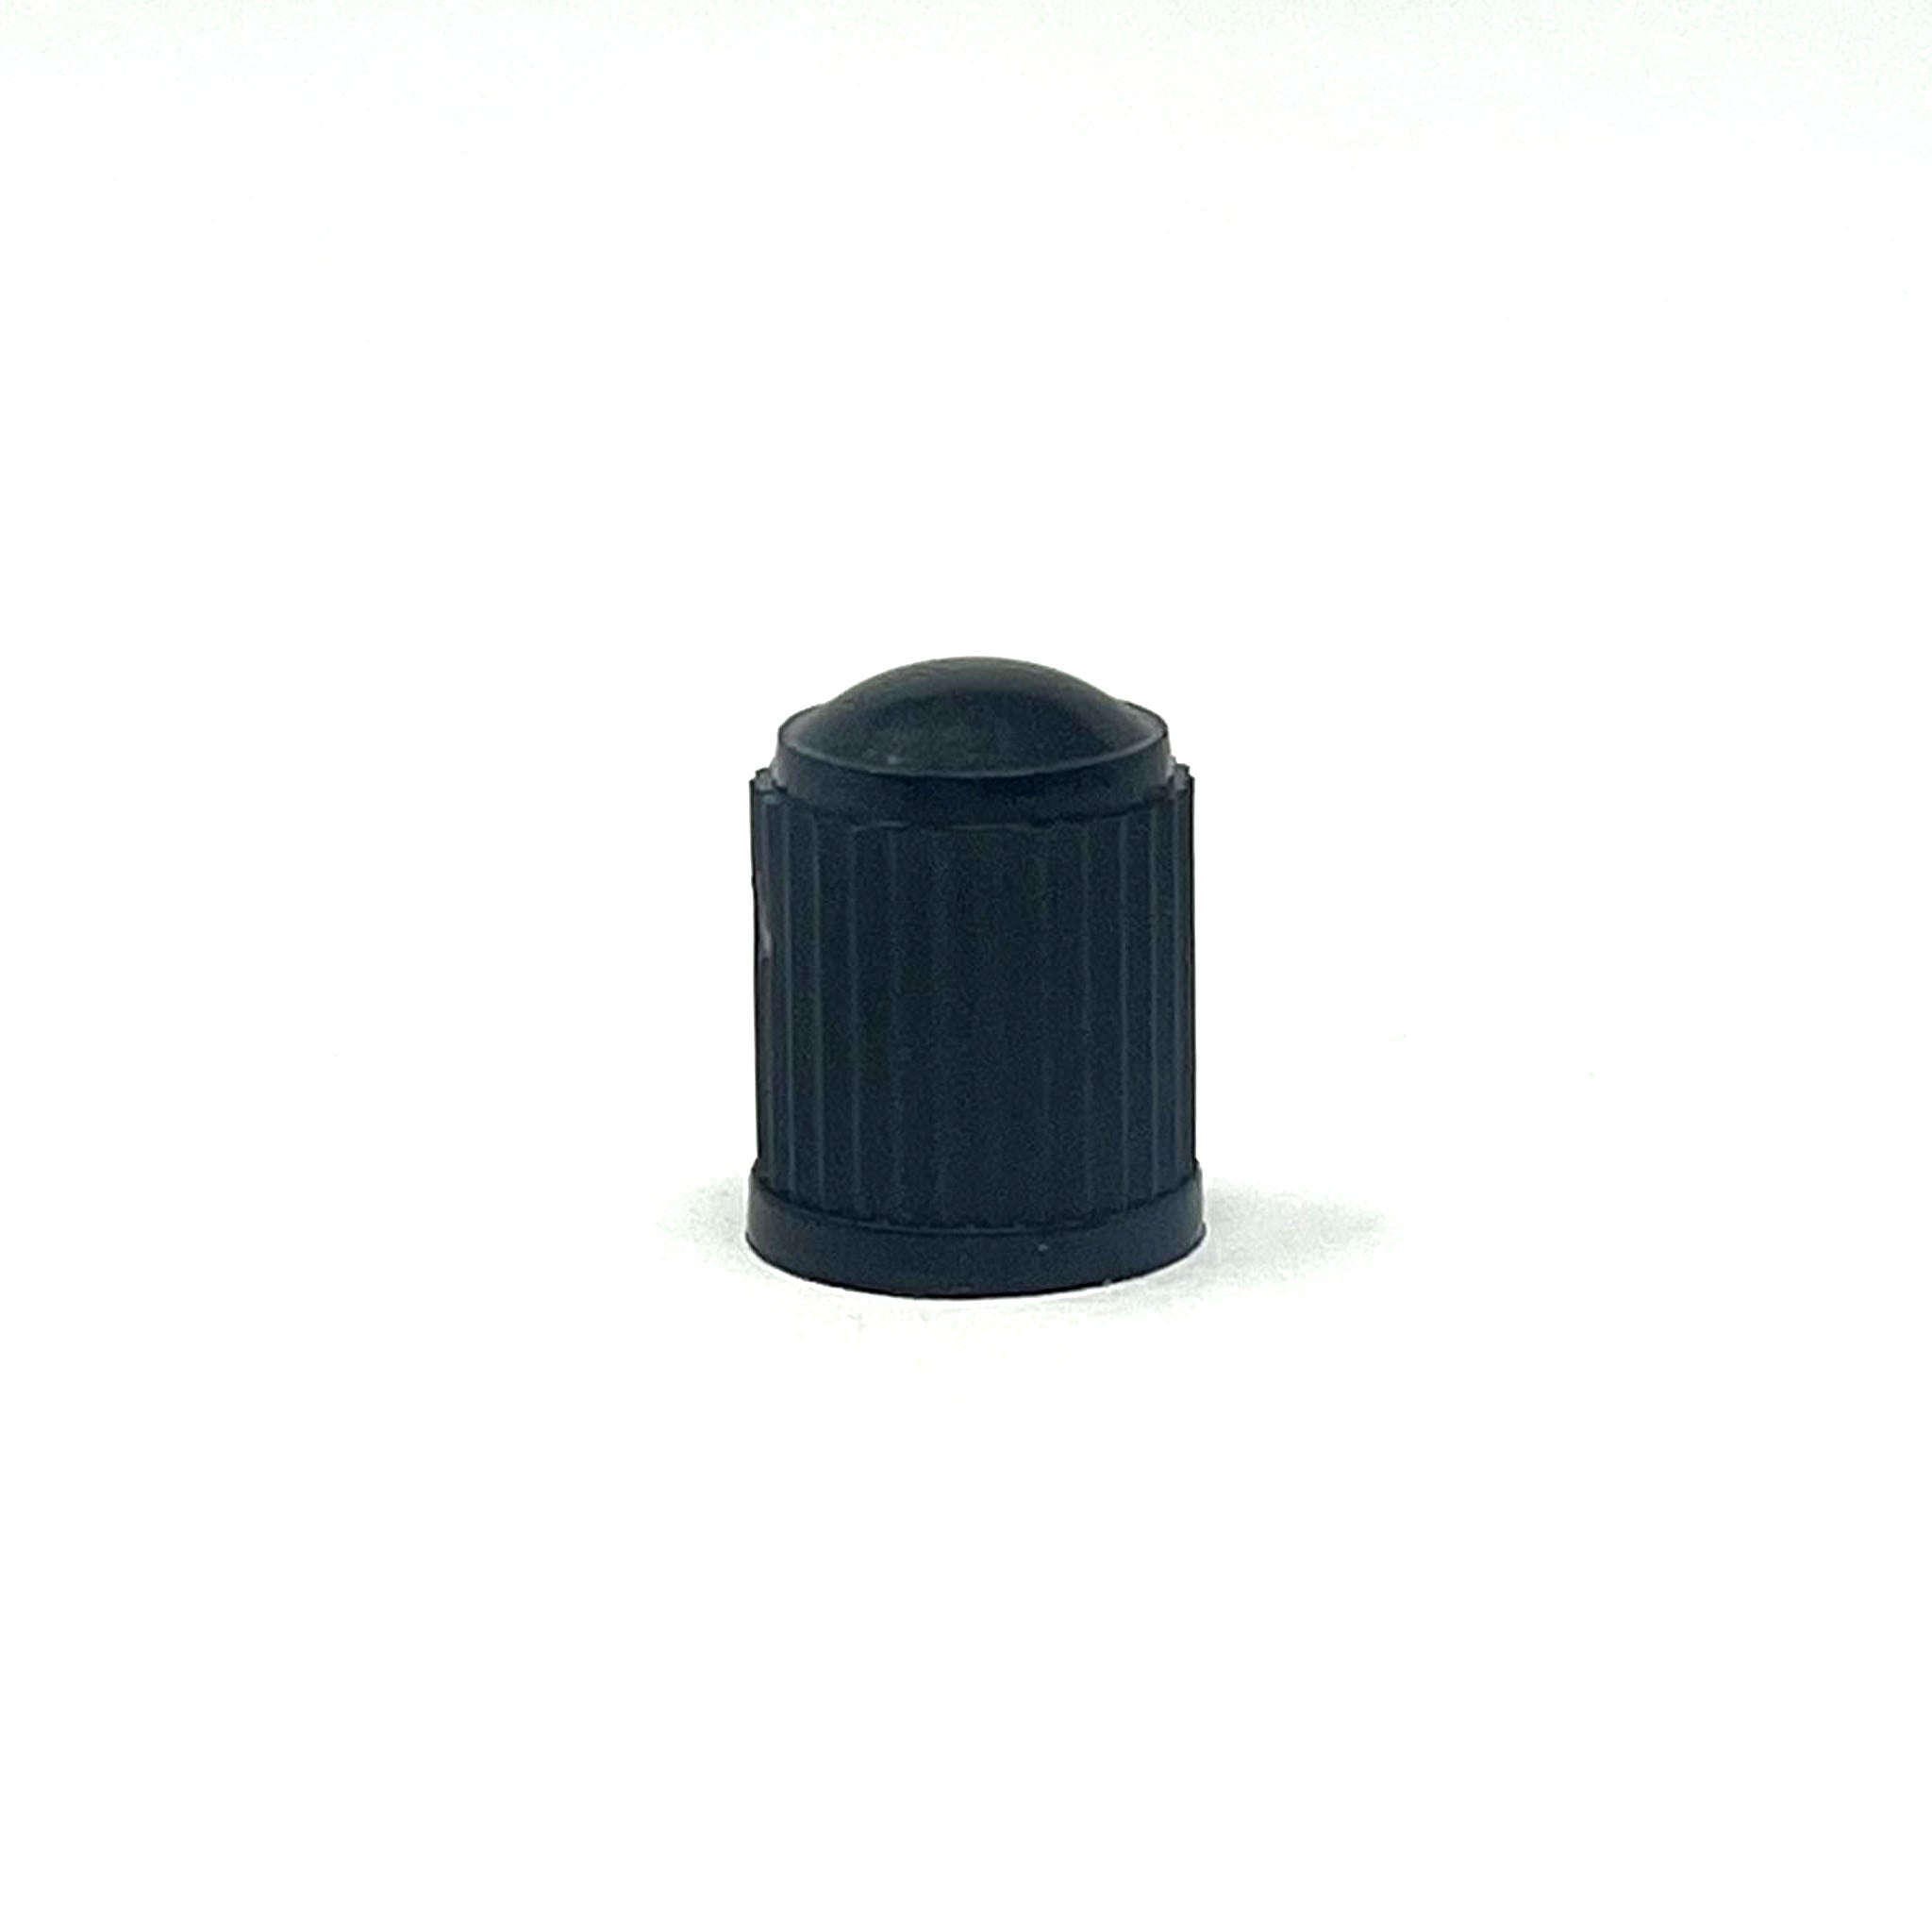 Black Plastic Valve Caps with O-ring 100/box